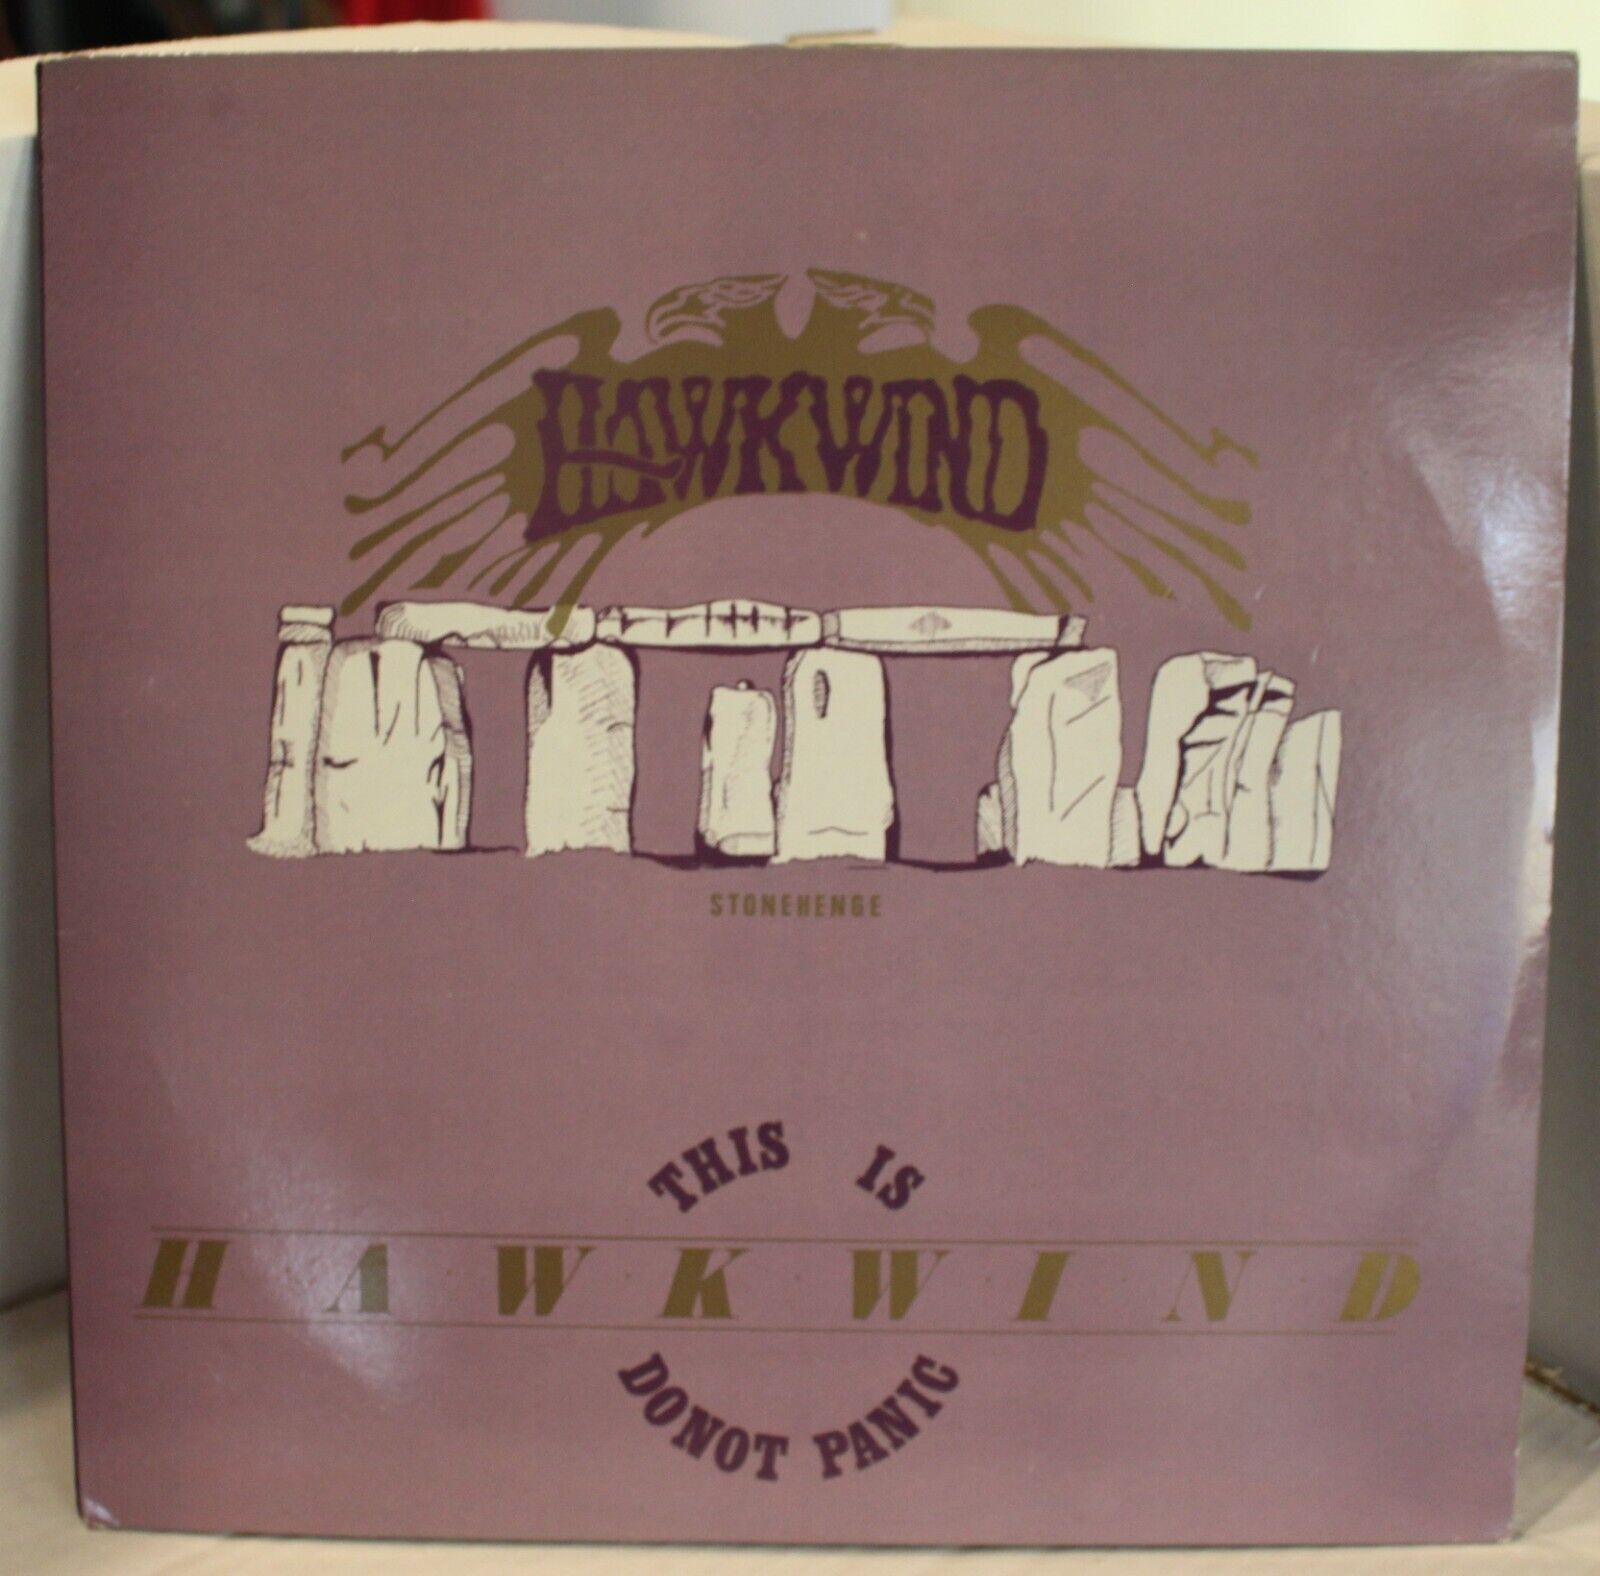 Hawkwind Vinyl LP Stonehenge This Is Hawkwind Do Not Panic Sharp 022 1st press